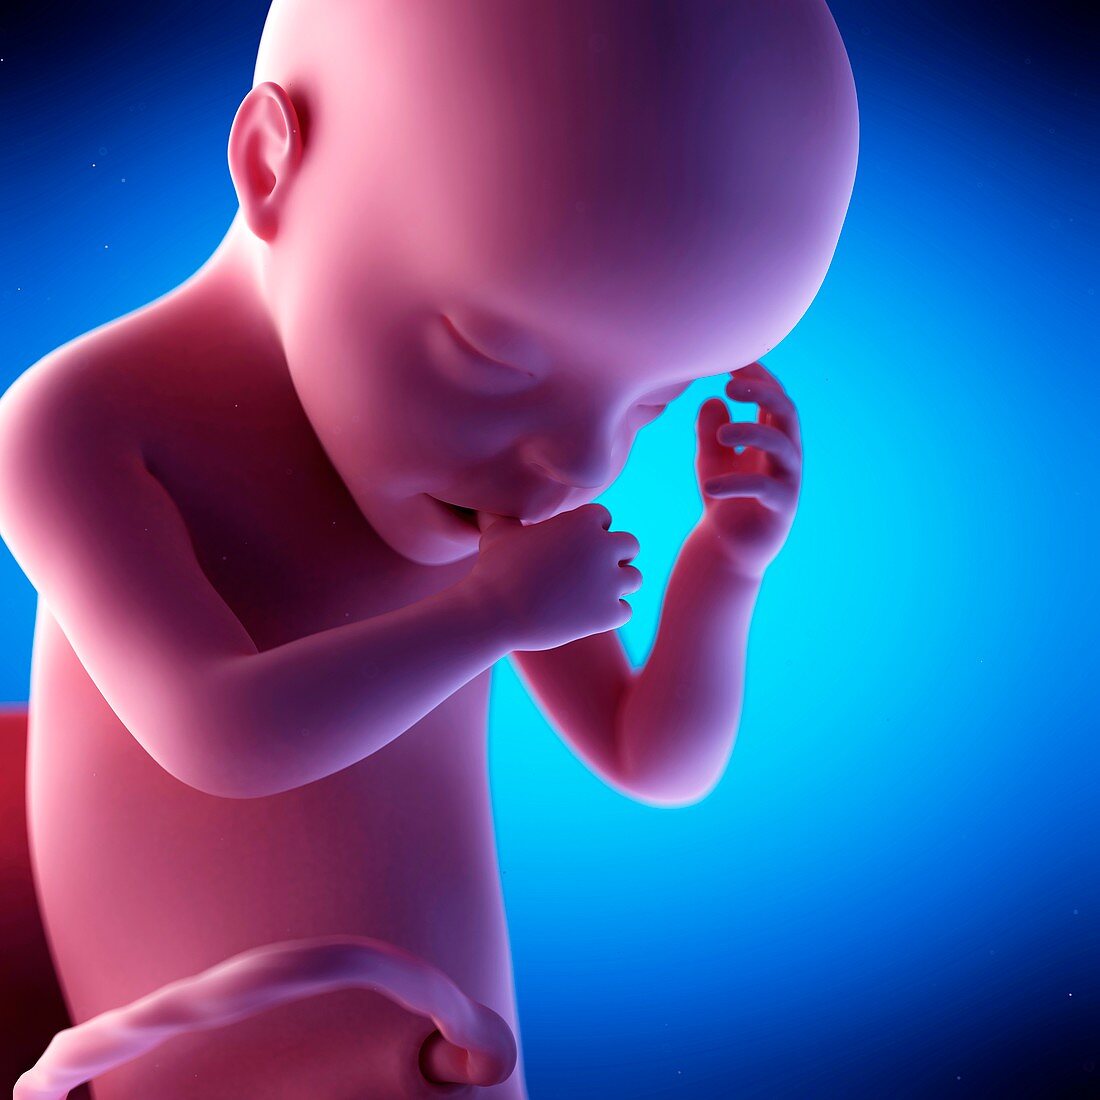 Human fetus at week 30 of gestation, illustration